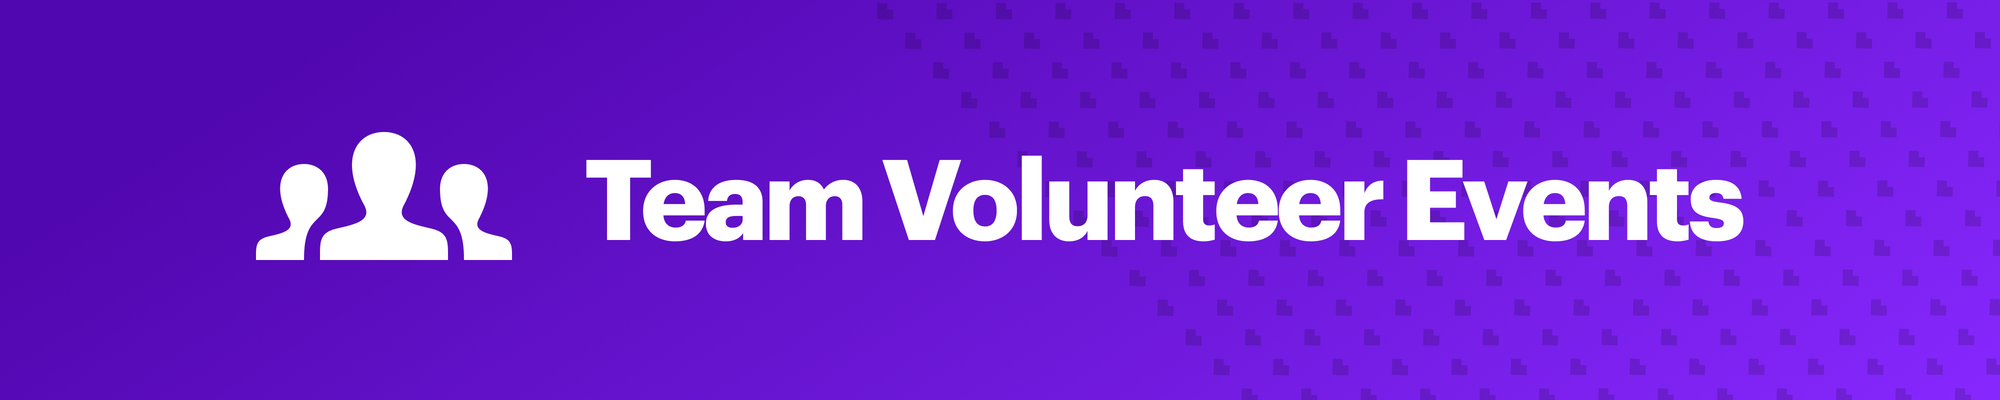 Team Volunteer Events